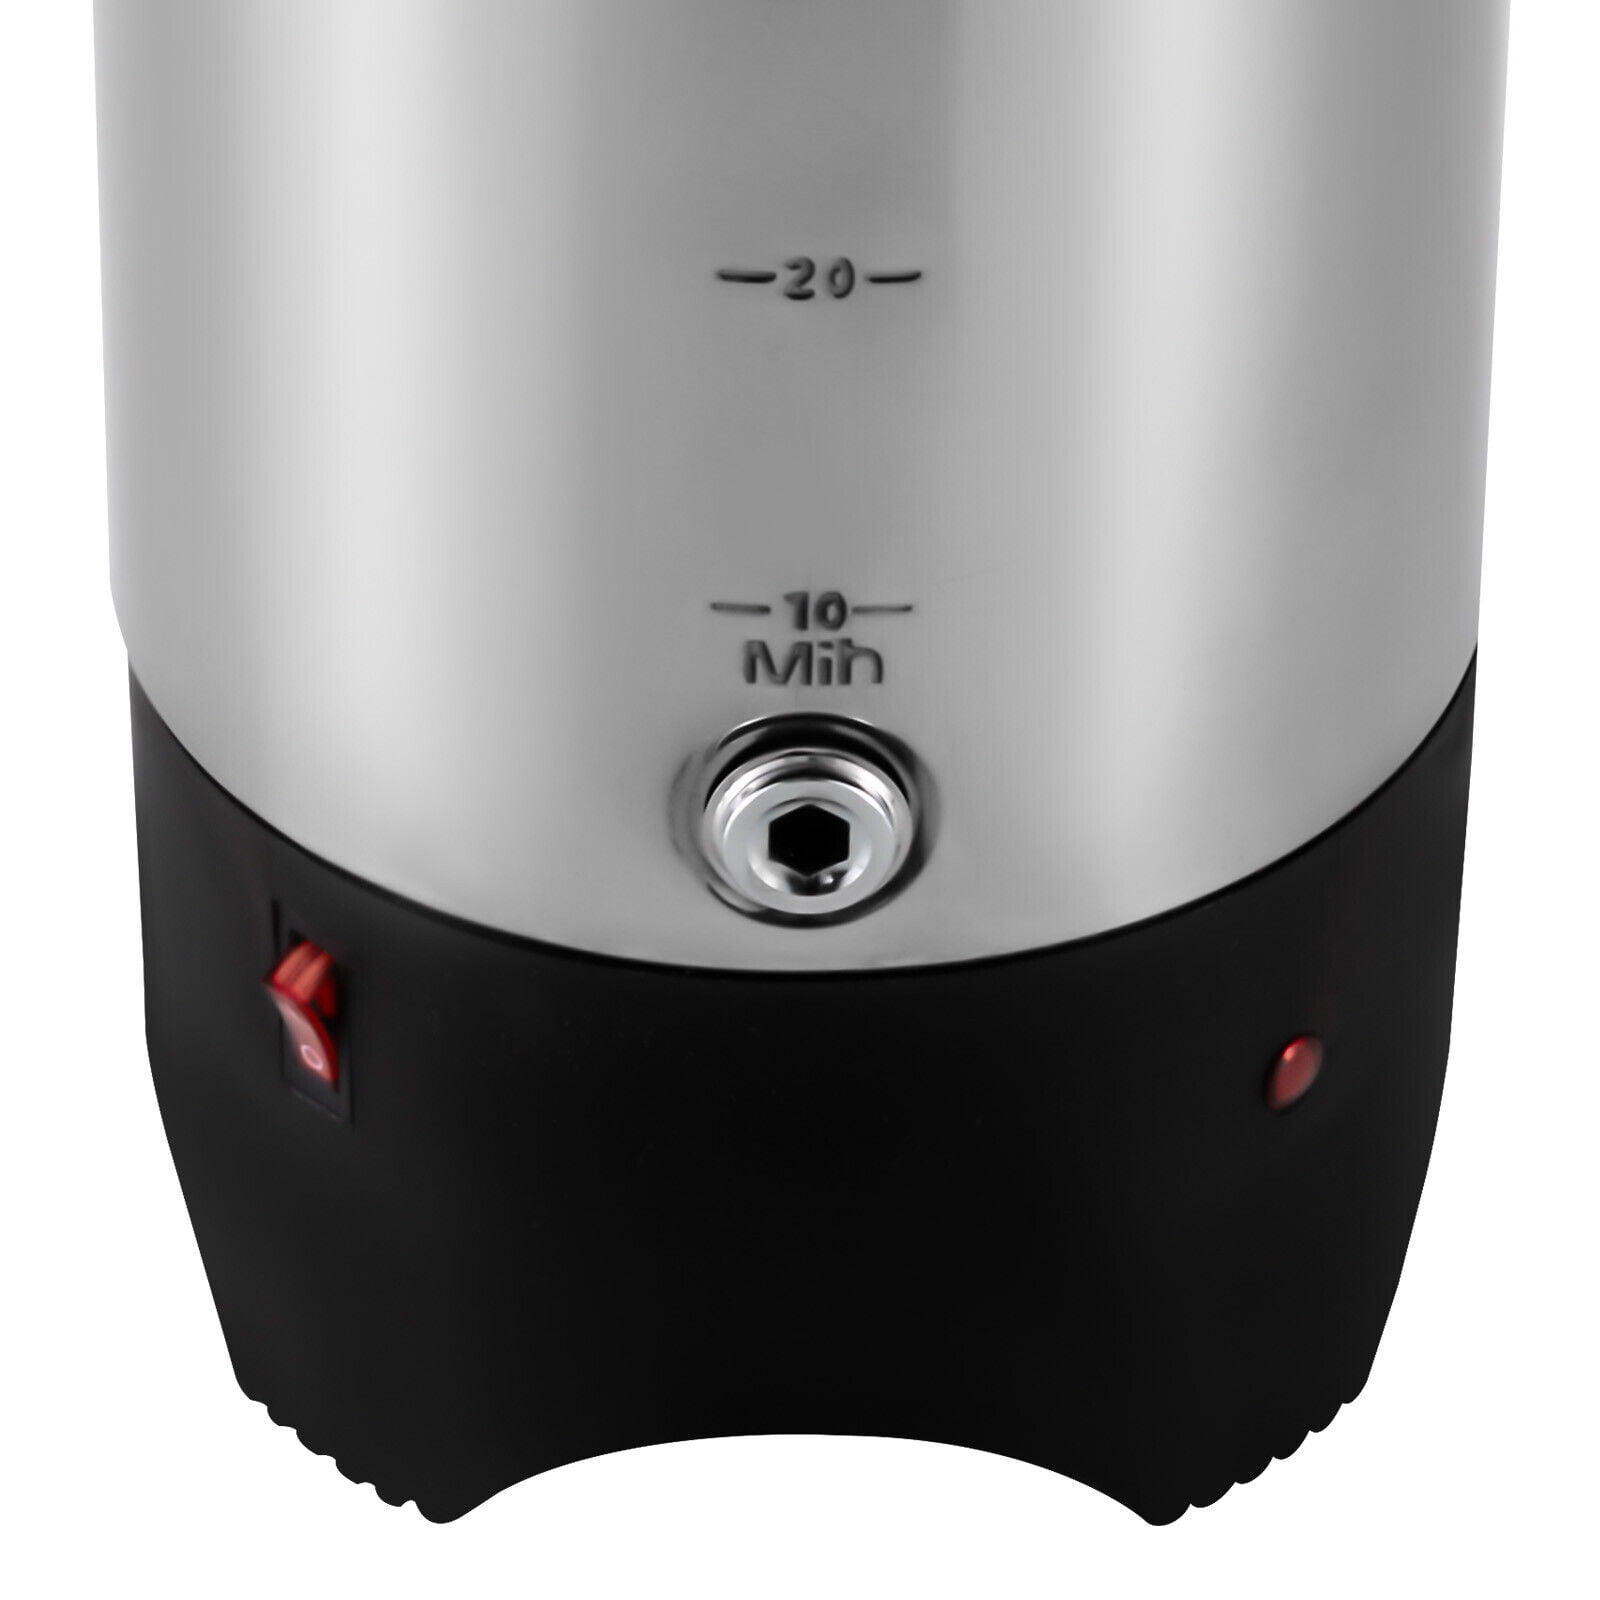 ZhdnBhnos 30-Cup Commercial Coffee Urn Percolator Tea Maker